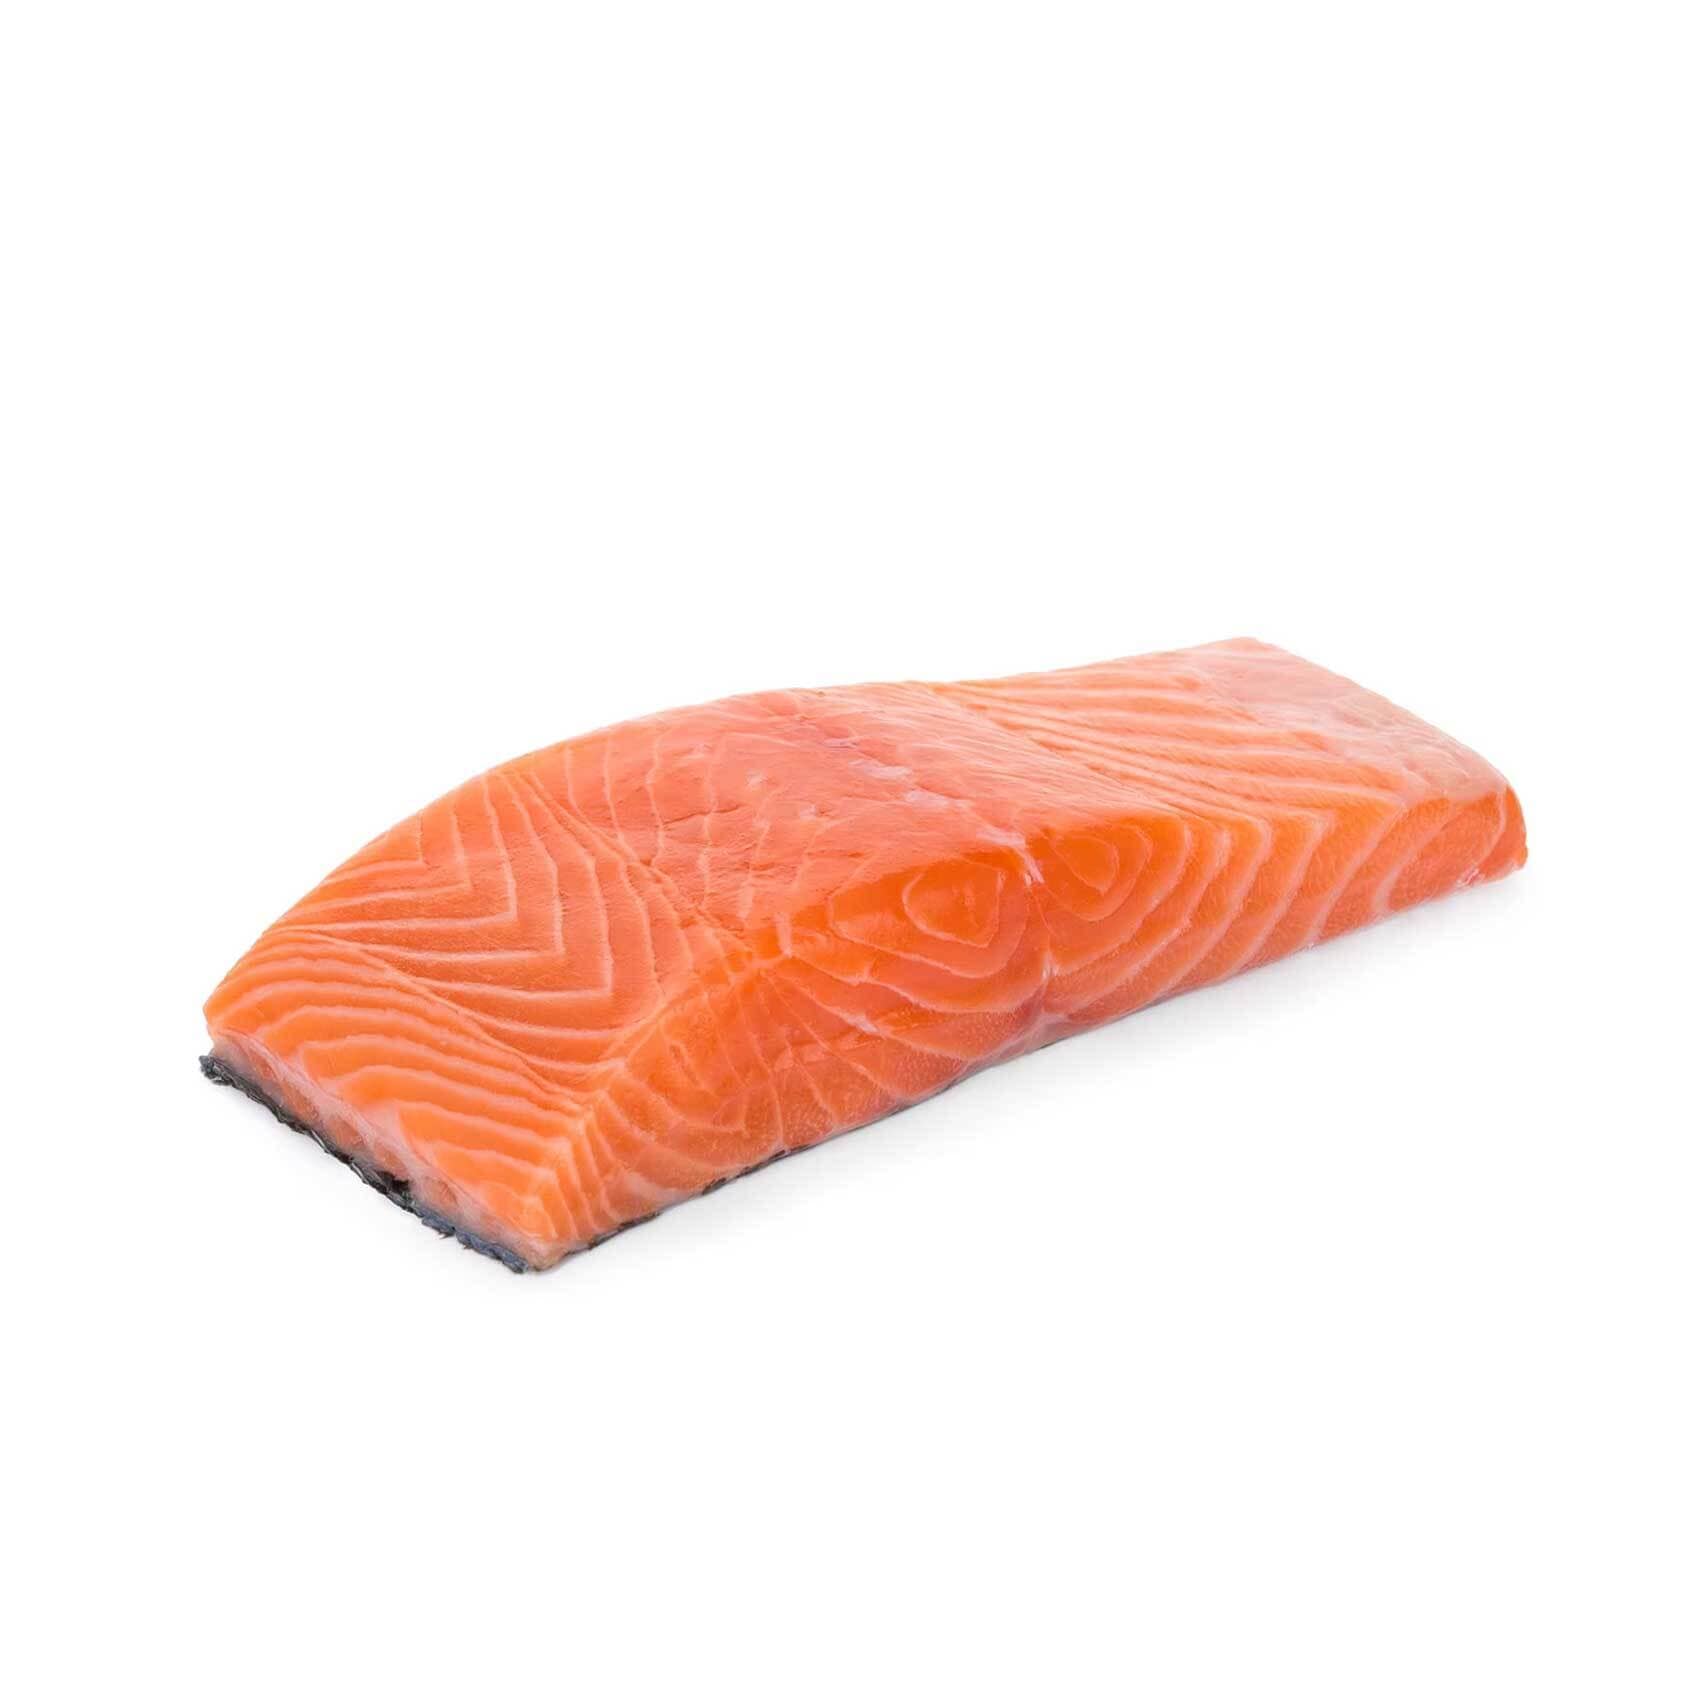 Buy Fresh Salmon Fish Fillet Online